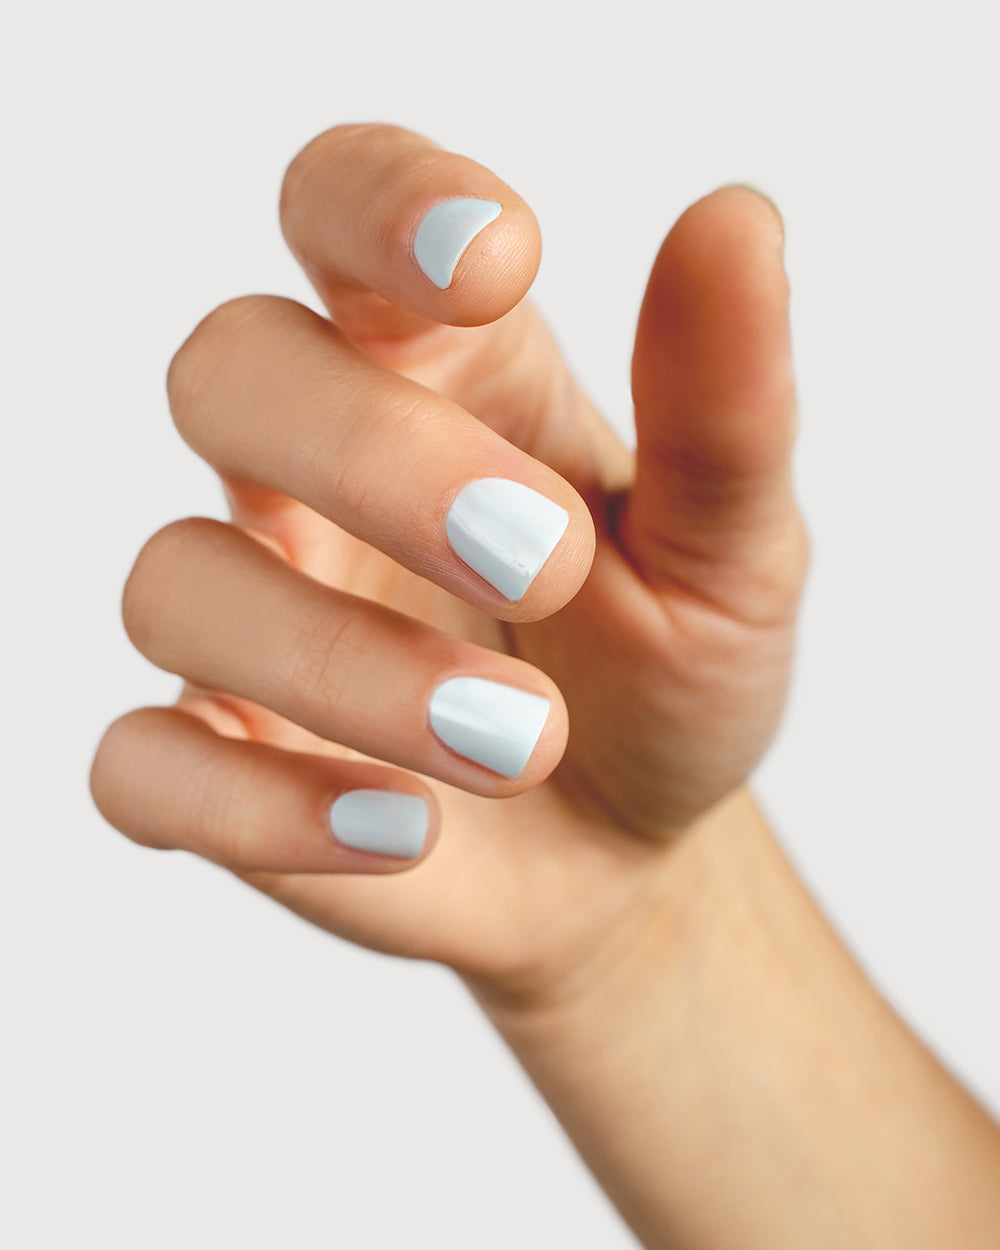 Pastel blue nail polish hand swatch on fair skin tone